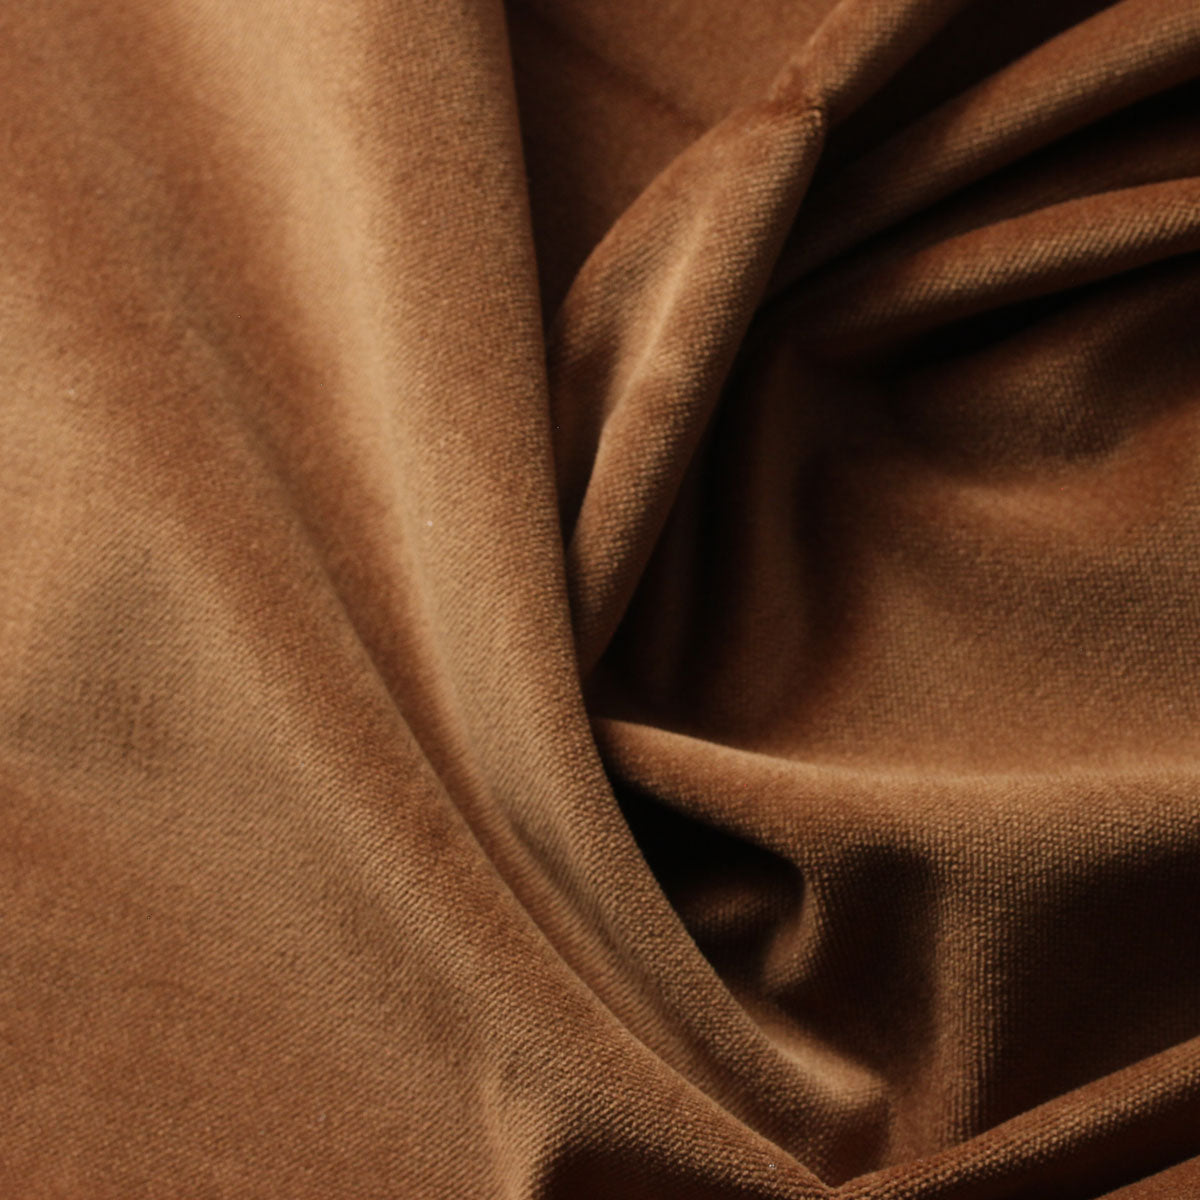 Light Brown Cotton Velvet Upholstery Drapery Fabric - Fashion Fabrics Los Angeles 